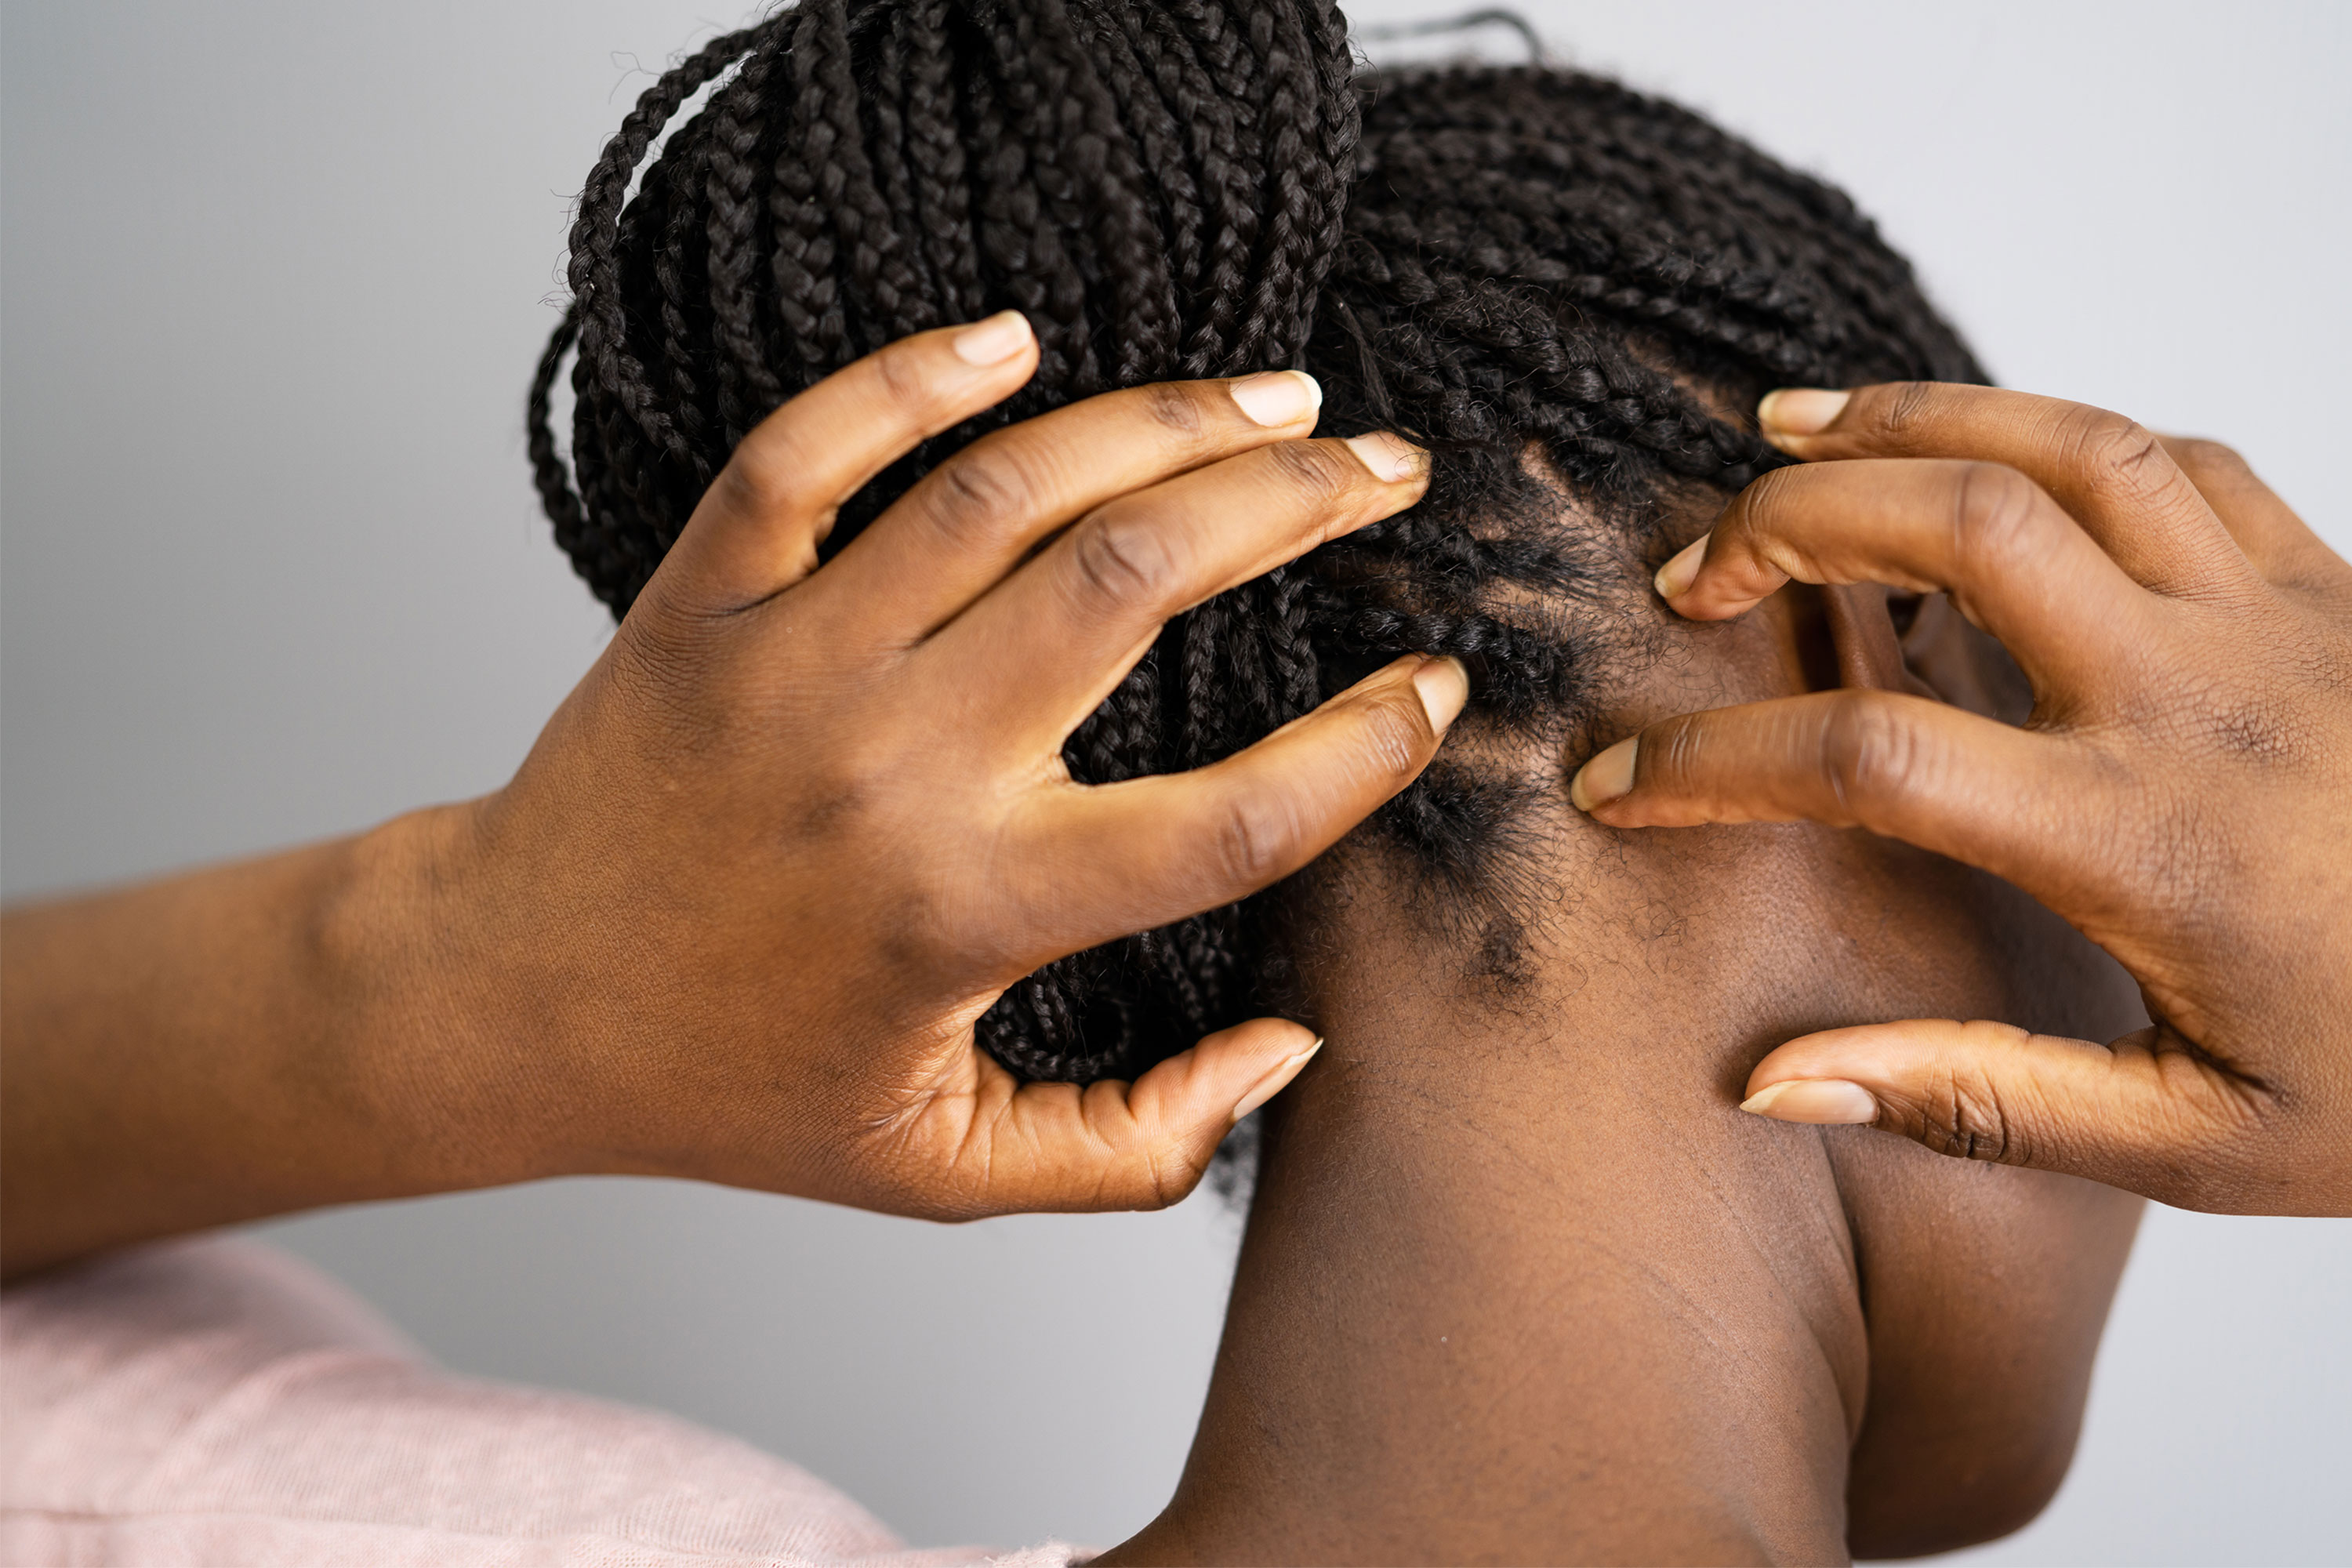 Pain on the scalp | Sore scalp | Try Neofollics